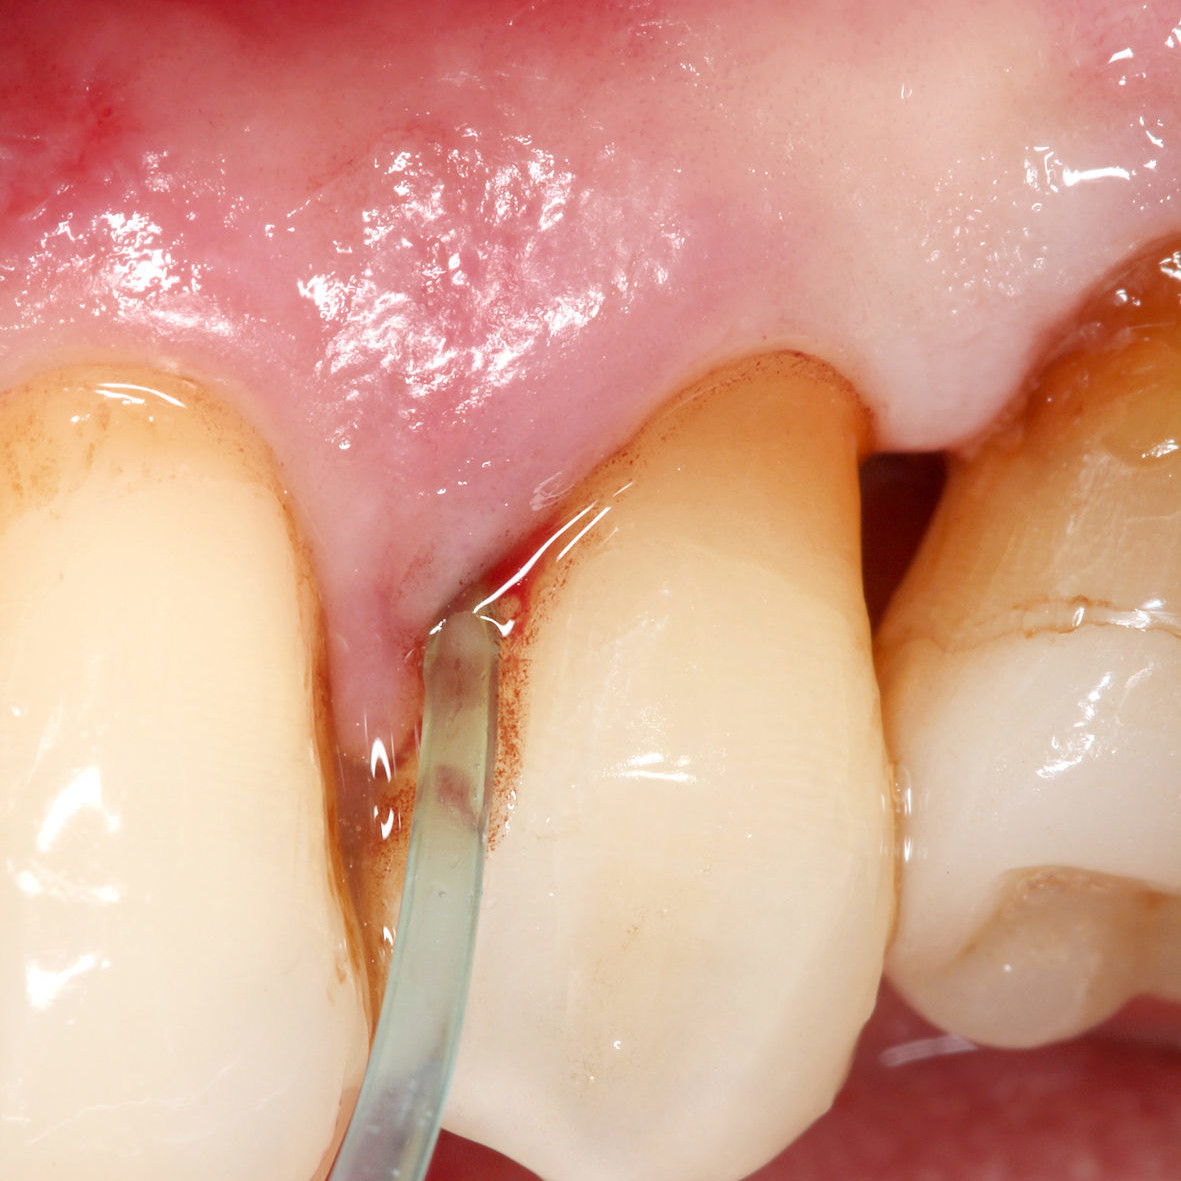 Second application of Perisolv into periodontal pocket